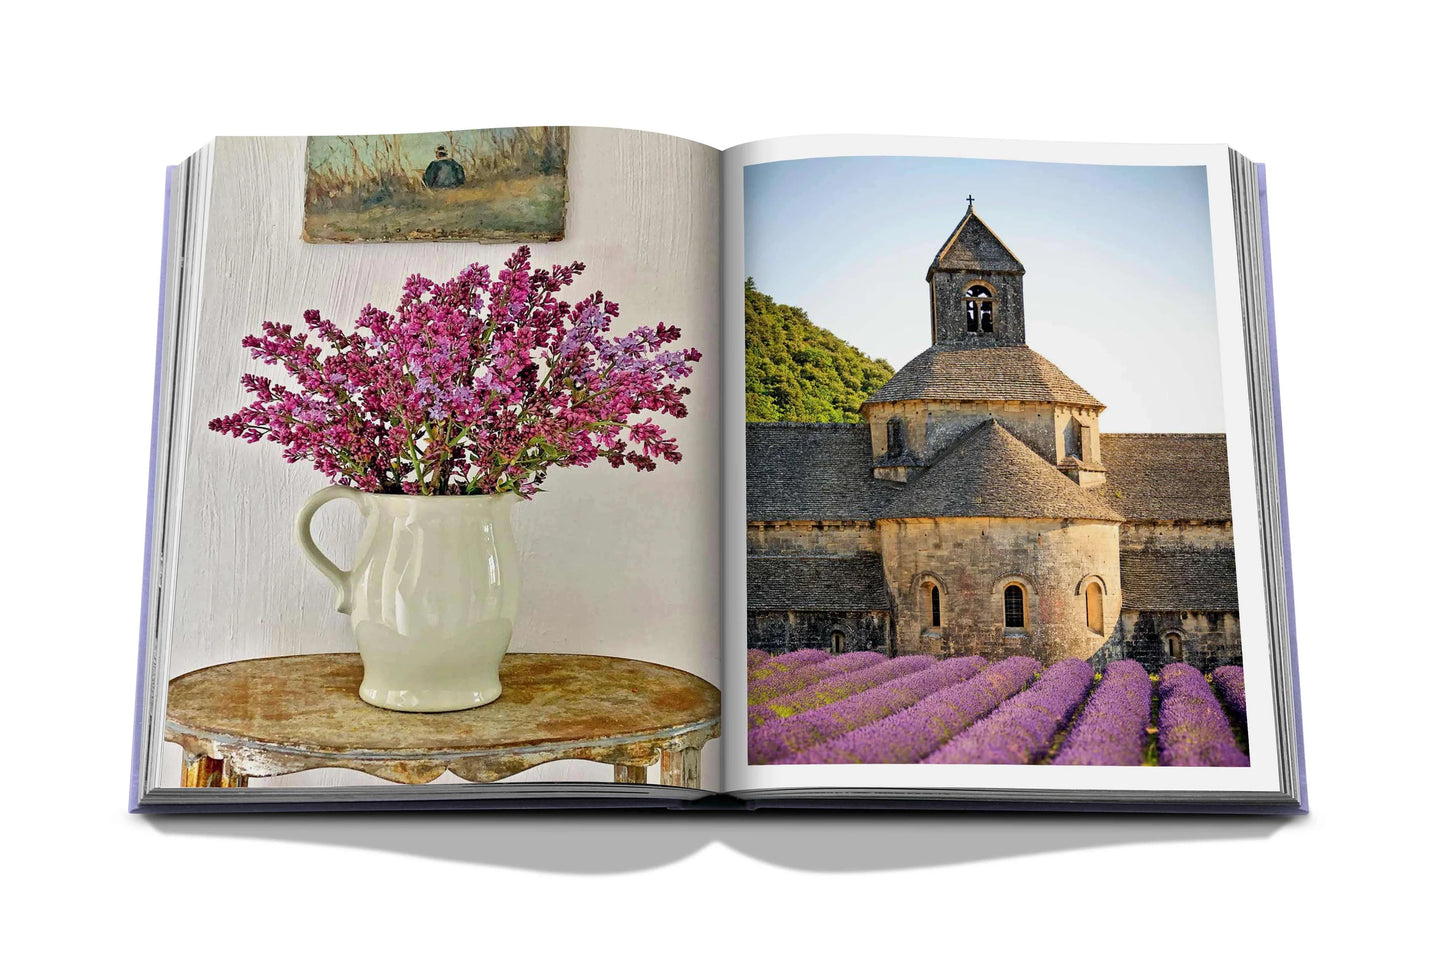 Bildband Provence Glory I ASSOULINE